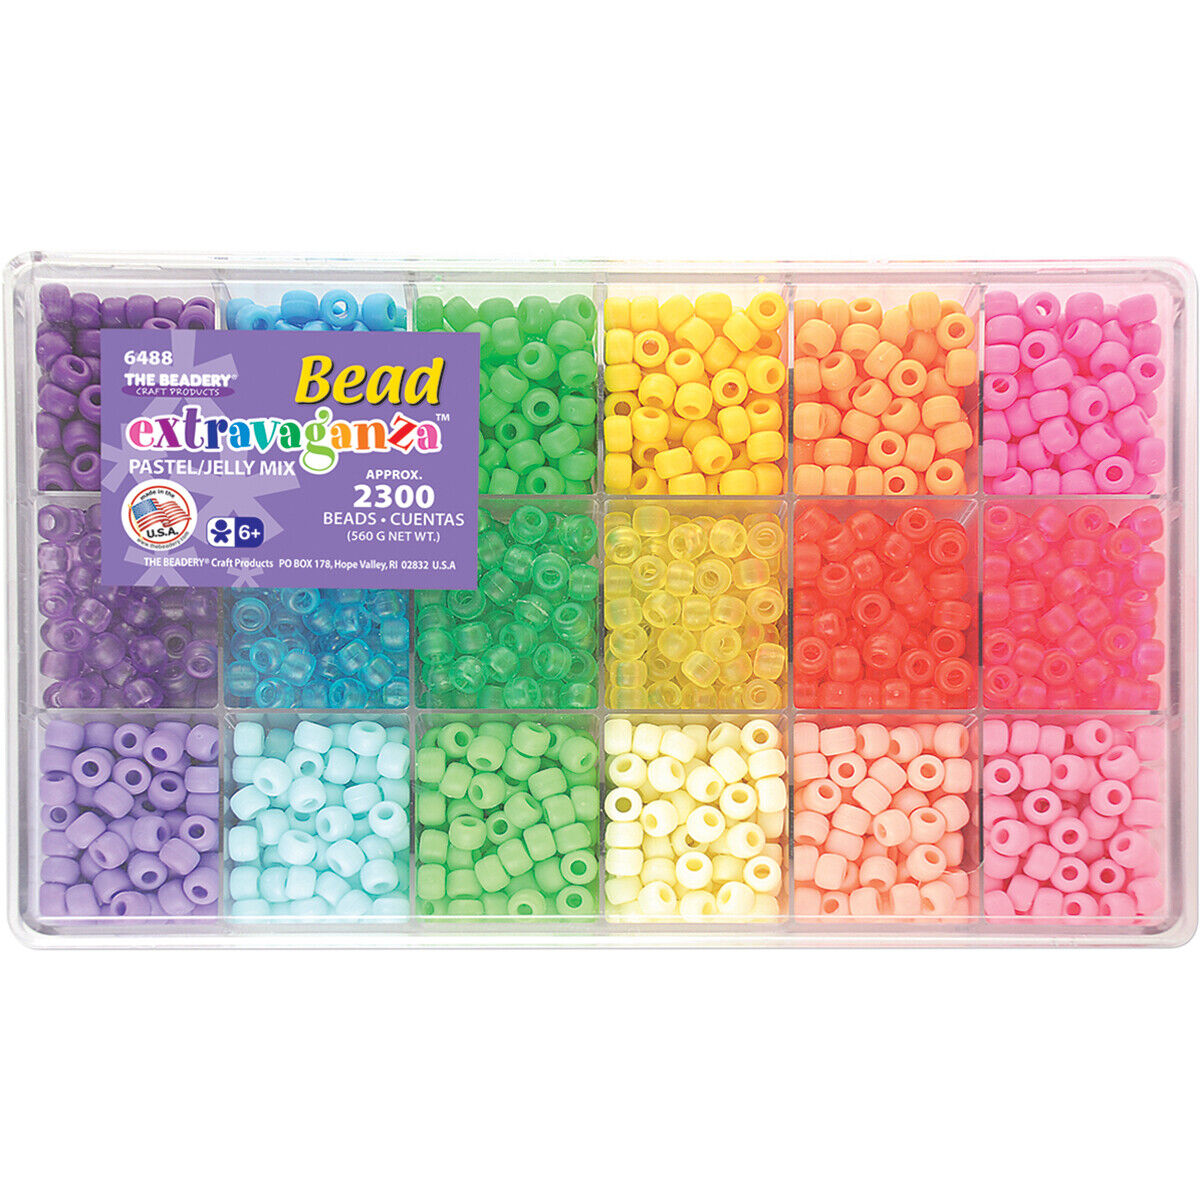 Bead Box Extravaganza Pastel/Jelly Mix 6488 – Beadery Products